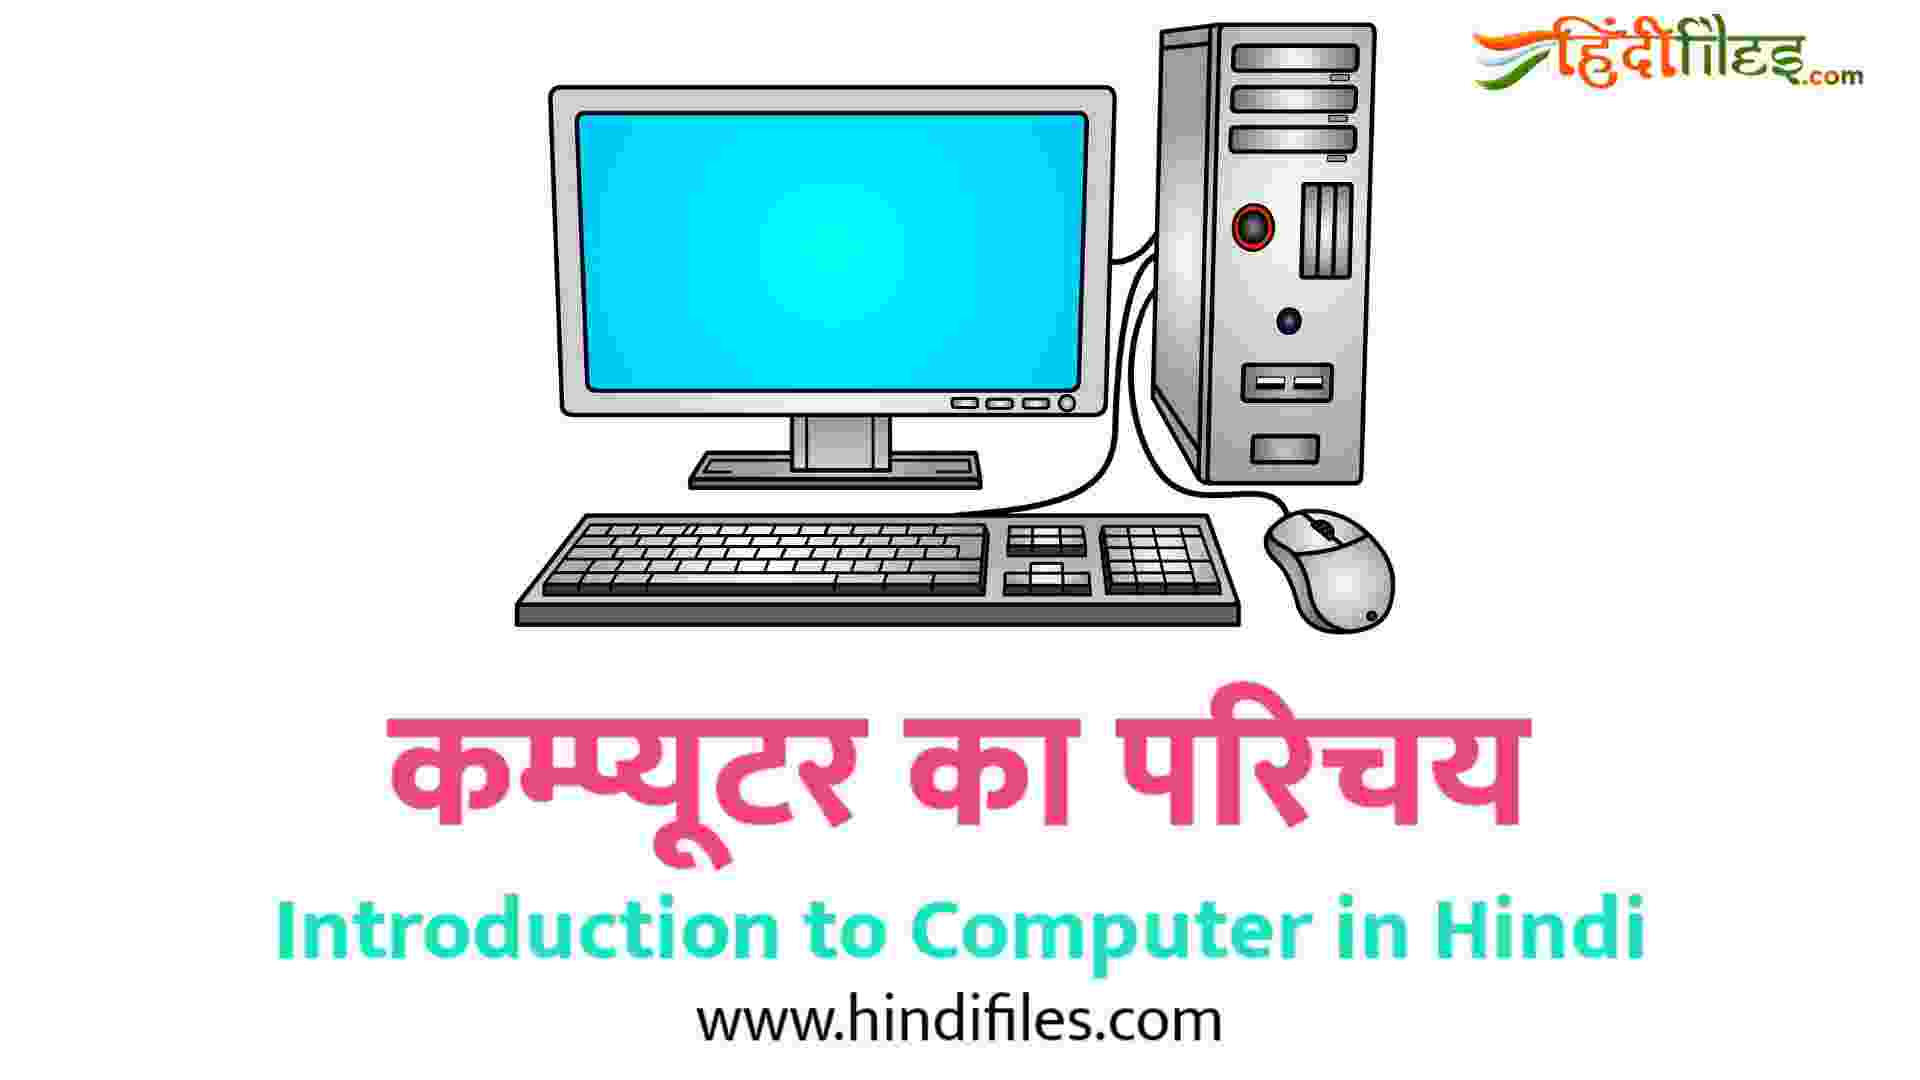 parts of computer in hindi essay